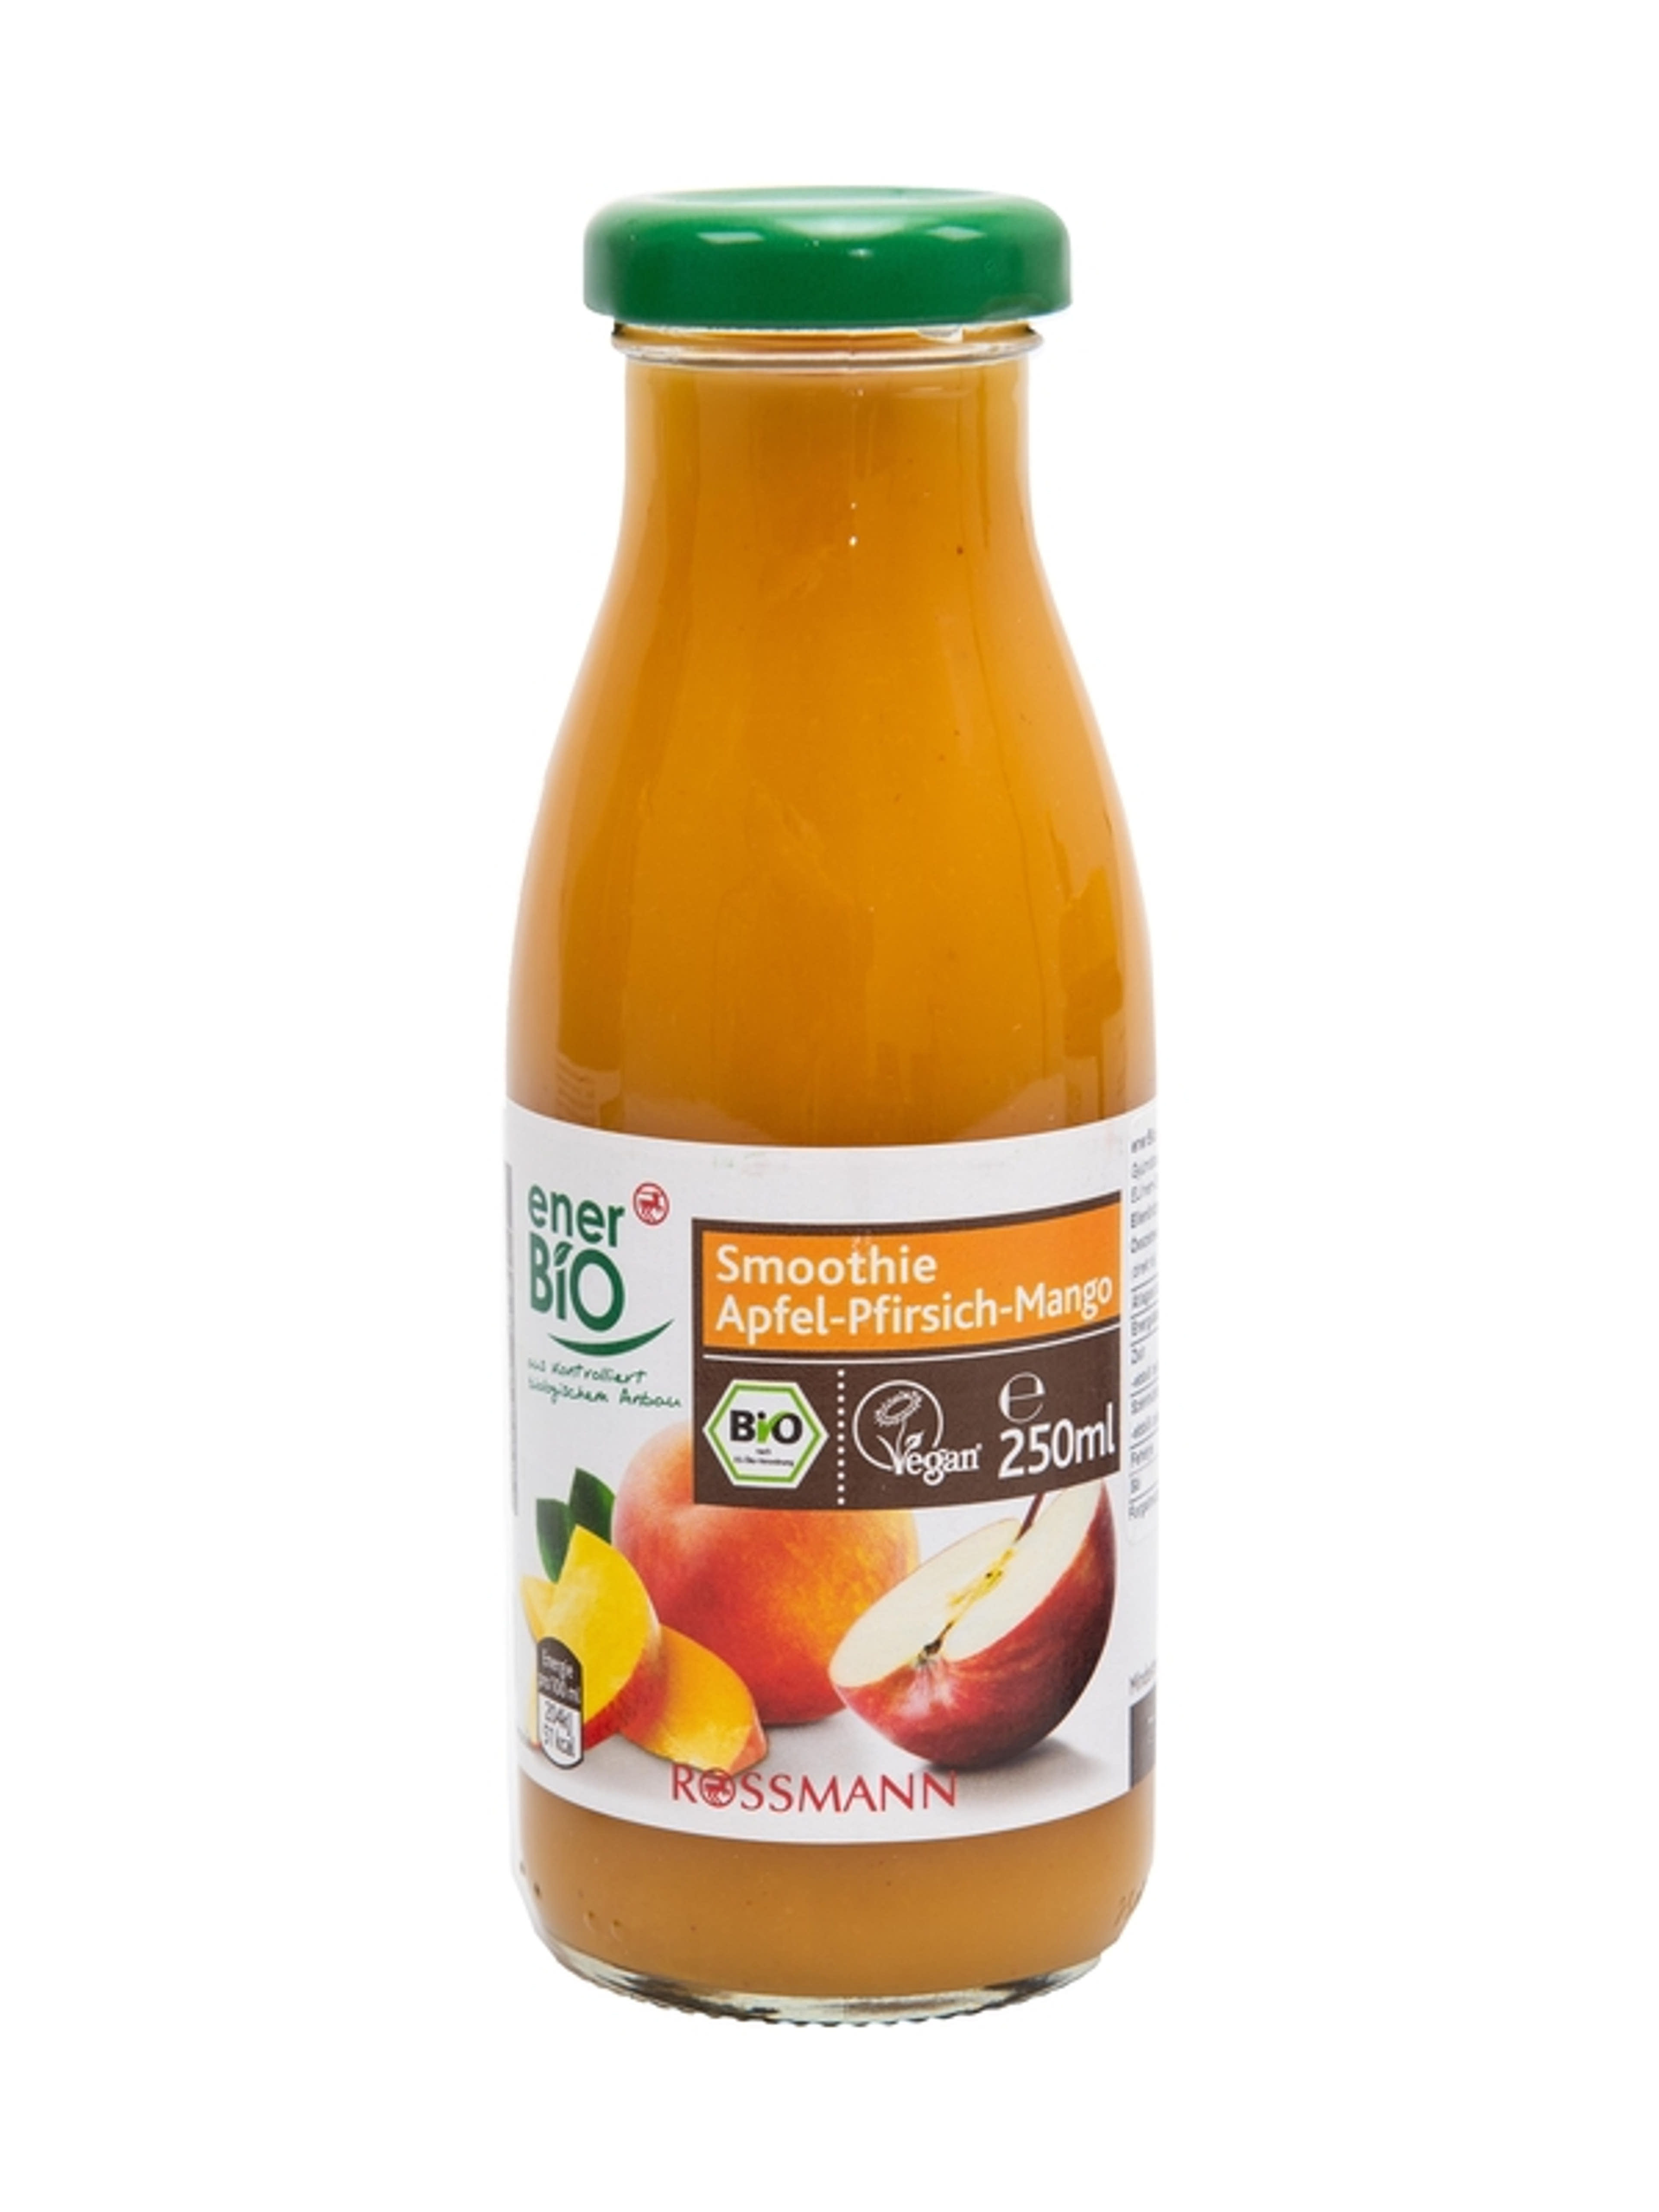 Ener-bio smoothie napkelte (alma-barack-mangó) - 250 ml